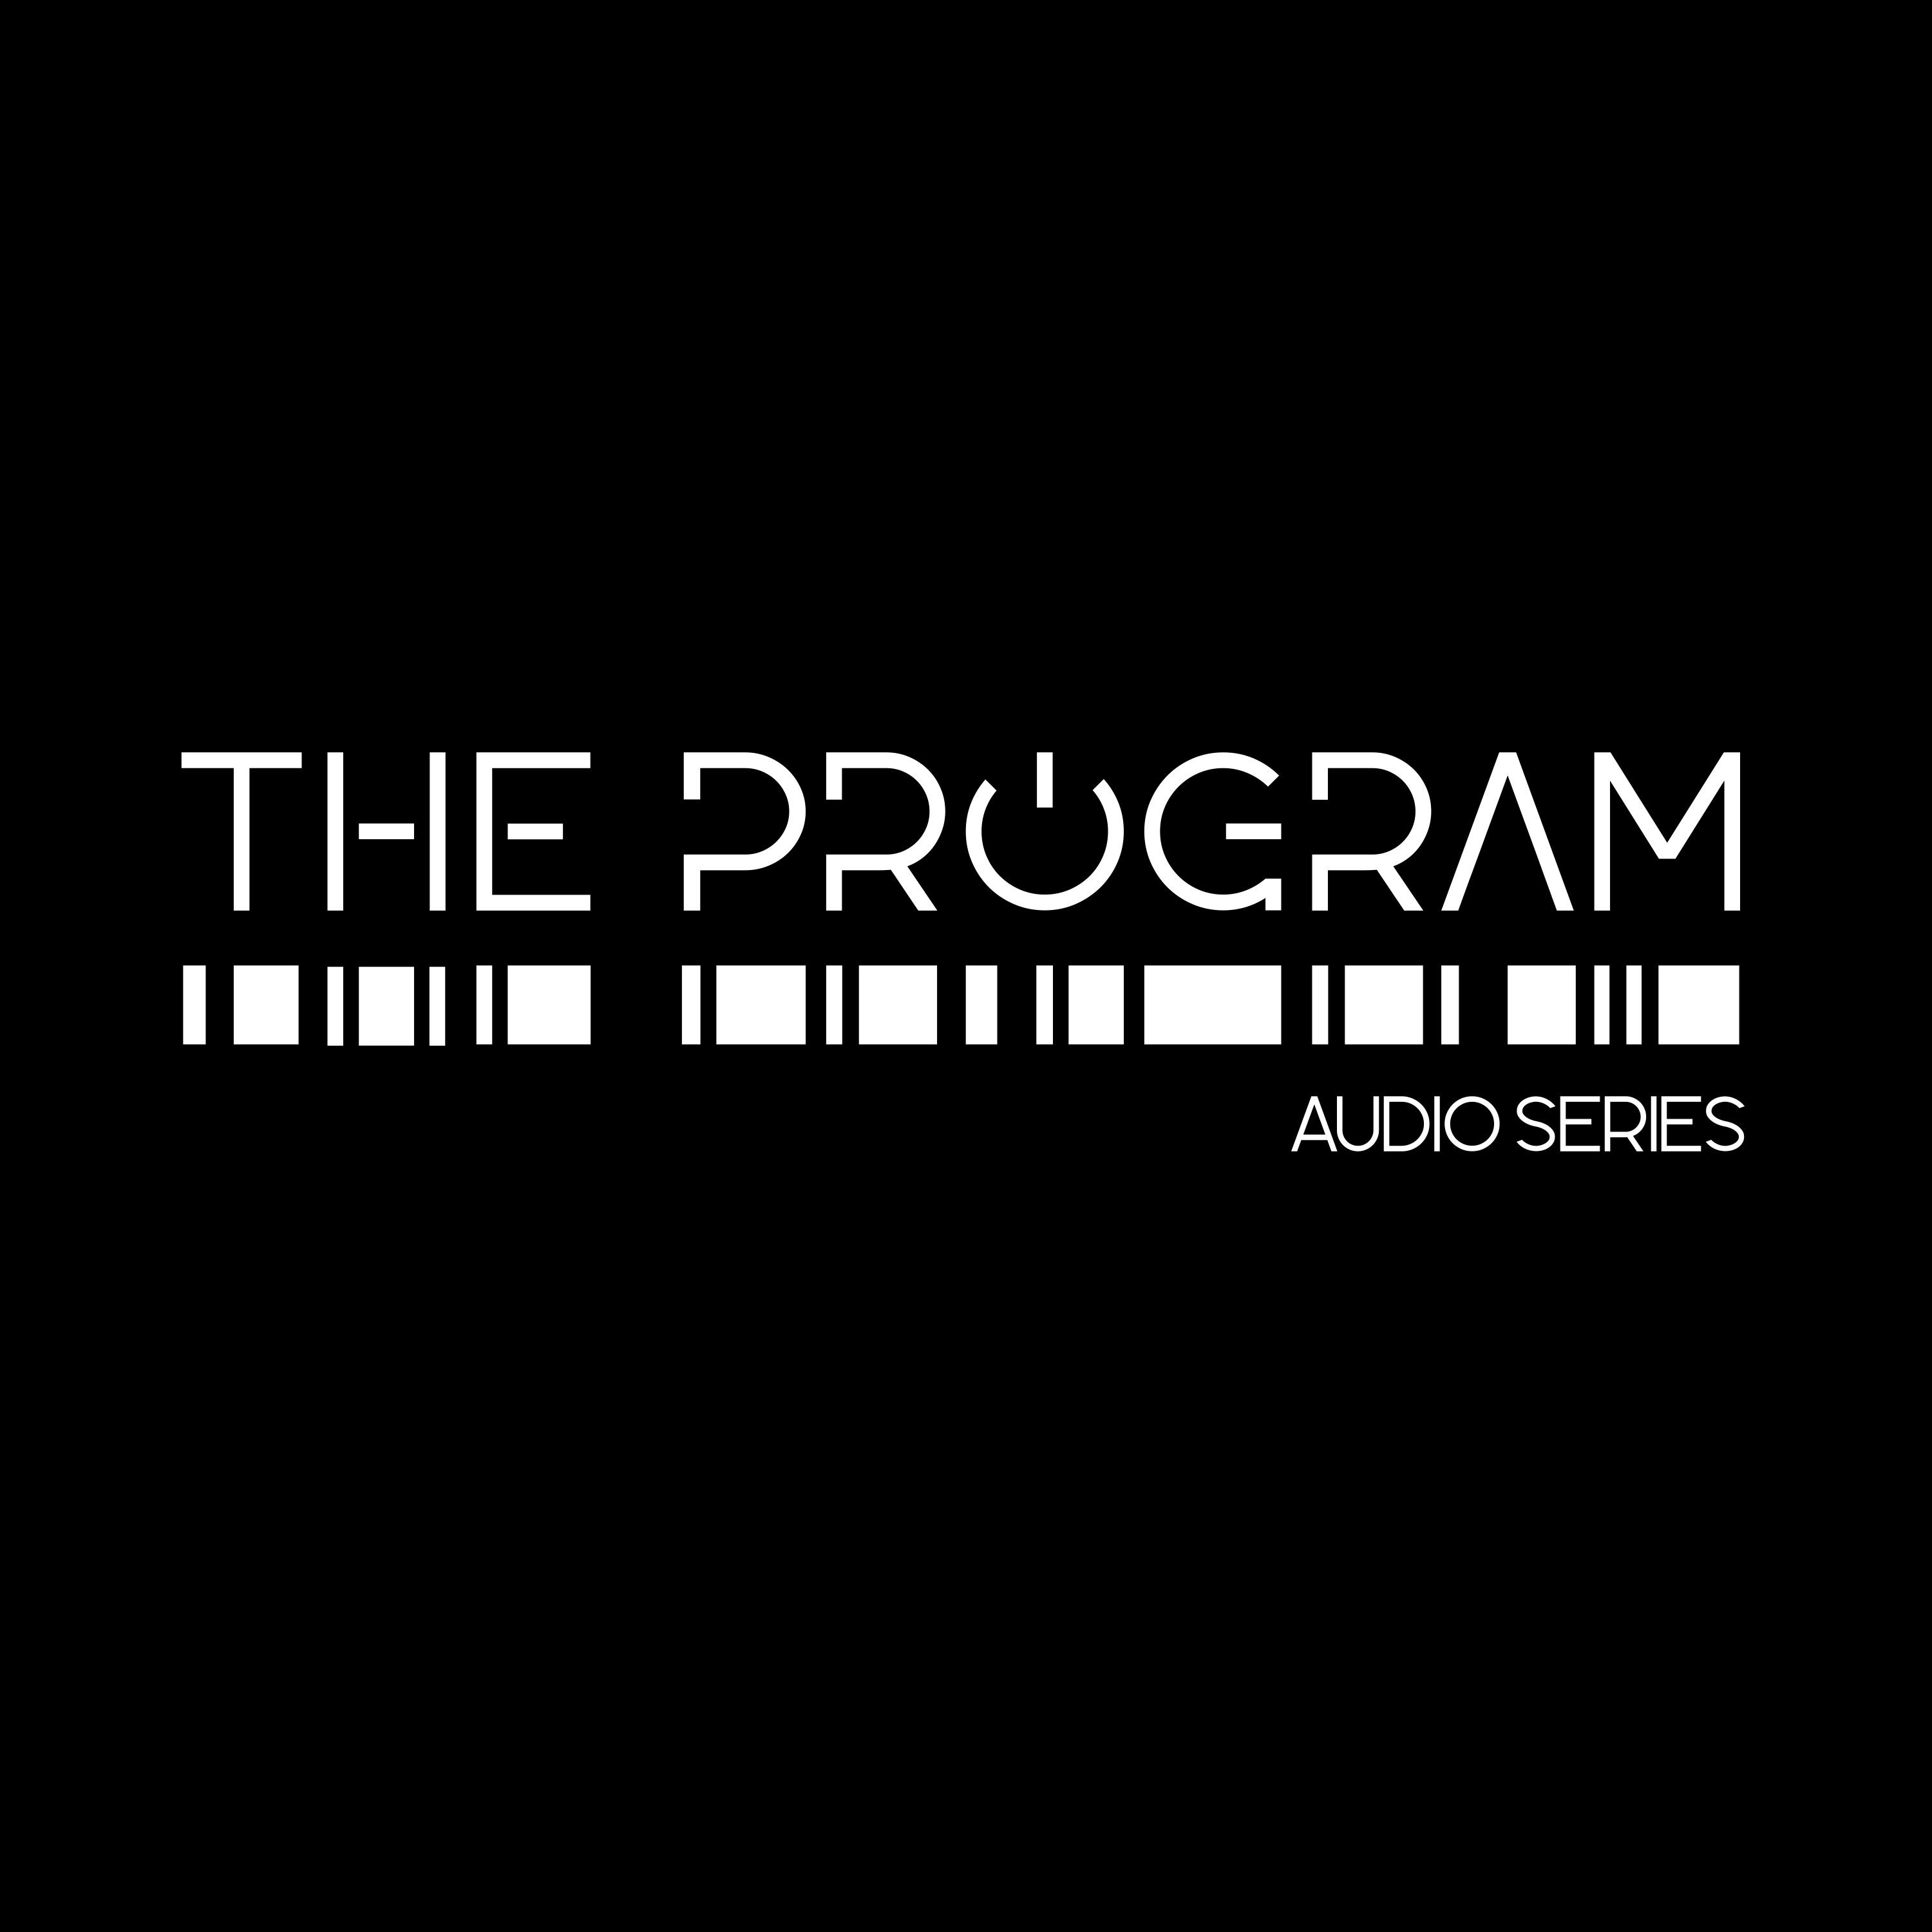 "The Program audio series" Podcast